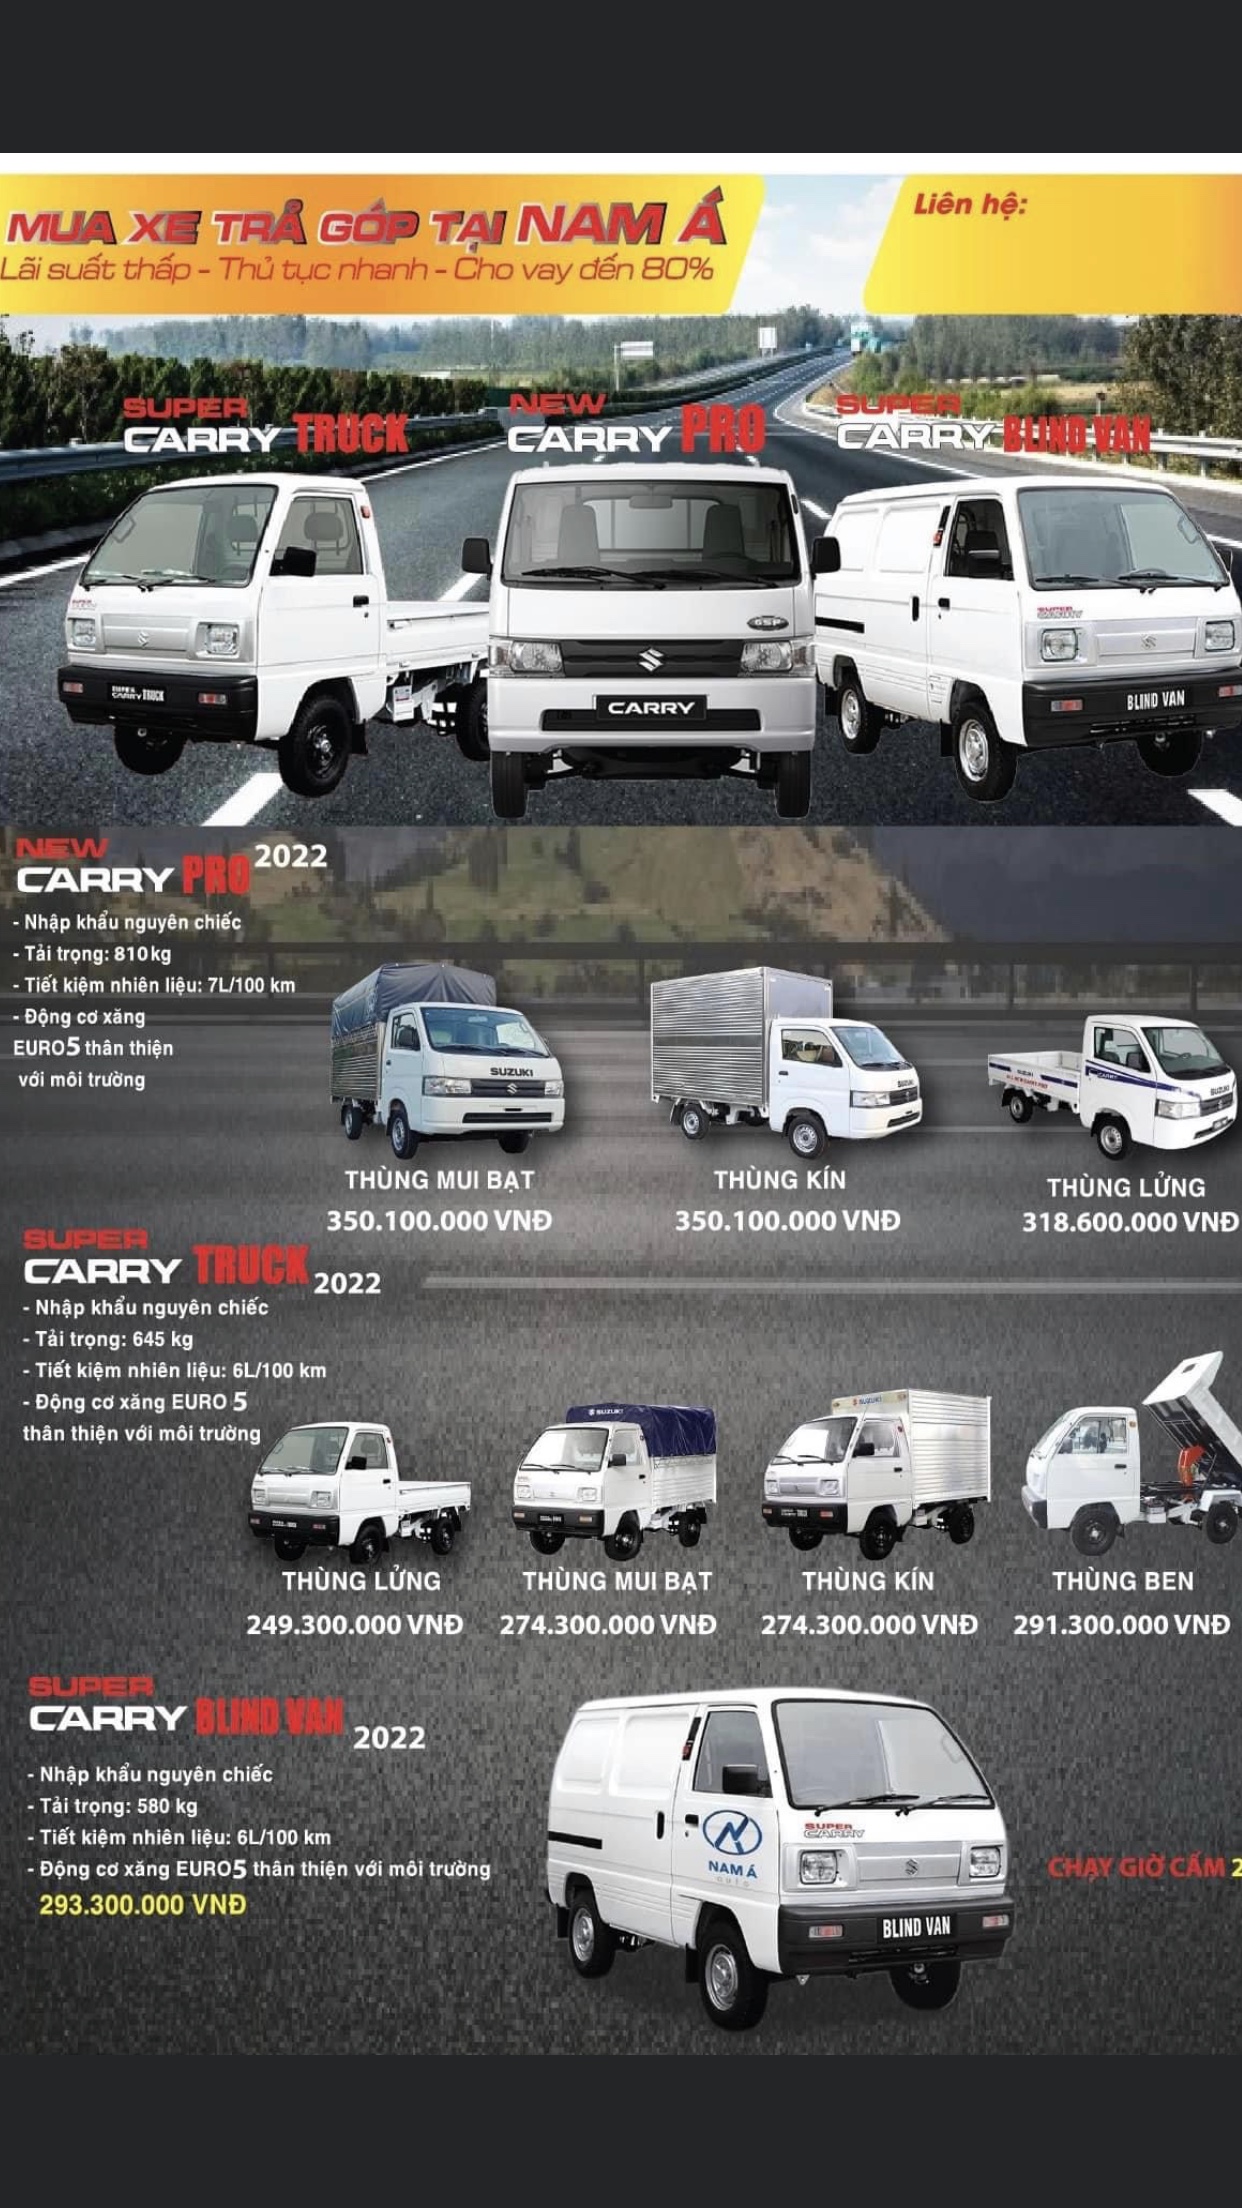 Suzuki Super Carry Pro 2022 - Suzuki Carry nhiều mẫu thùng phù hợp mọi mặt hàng